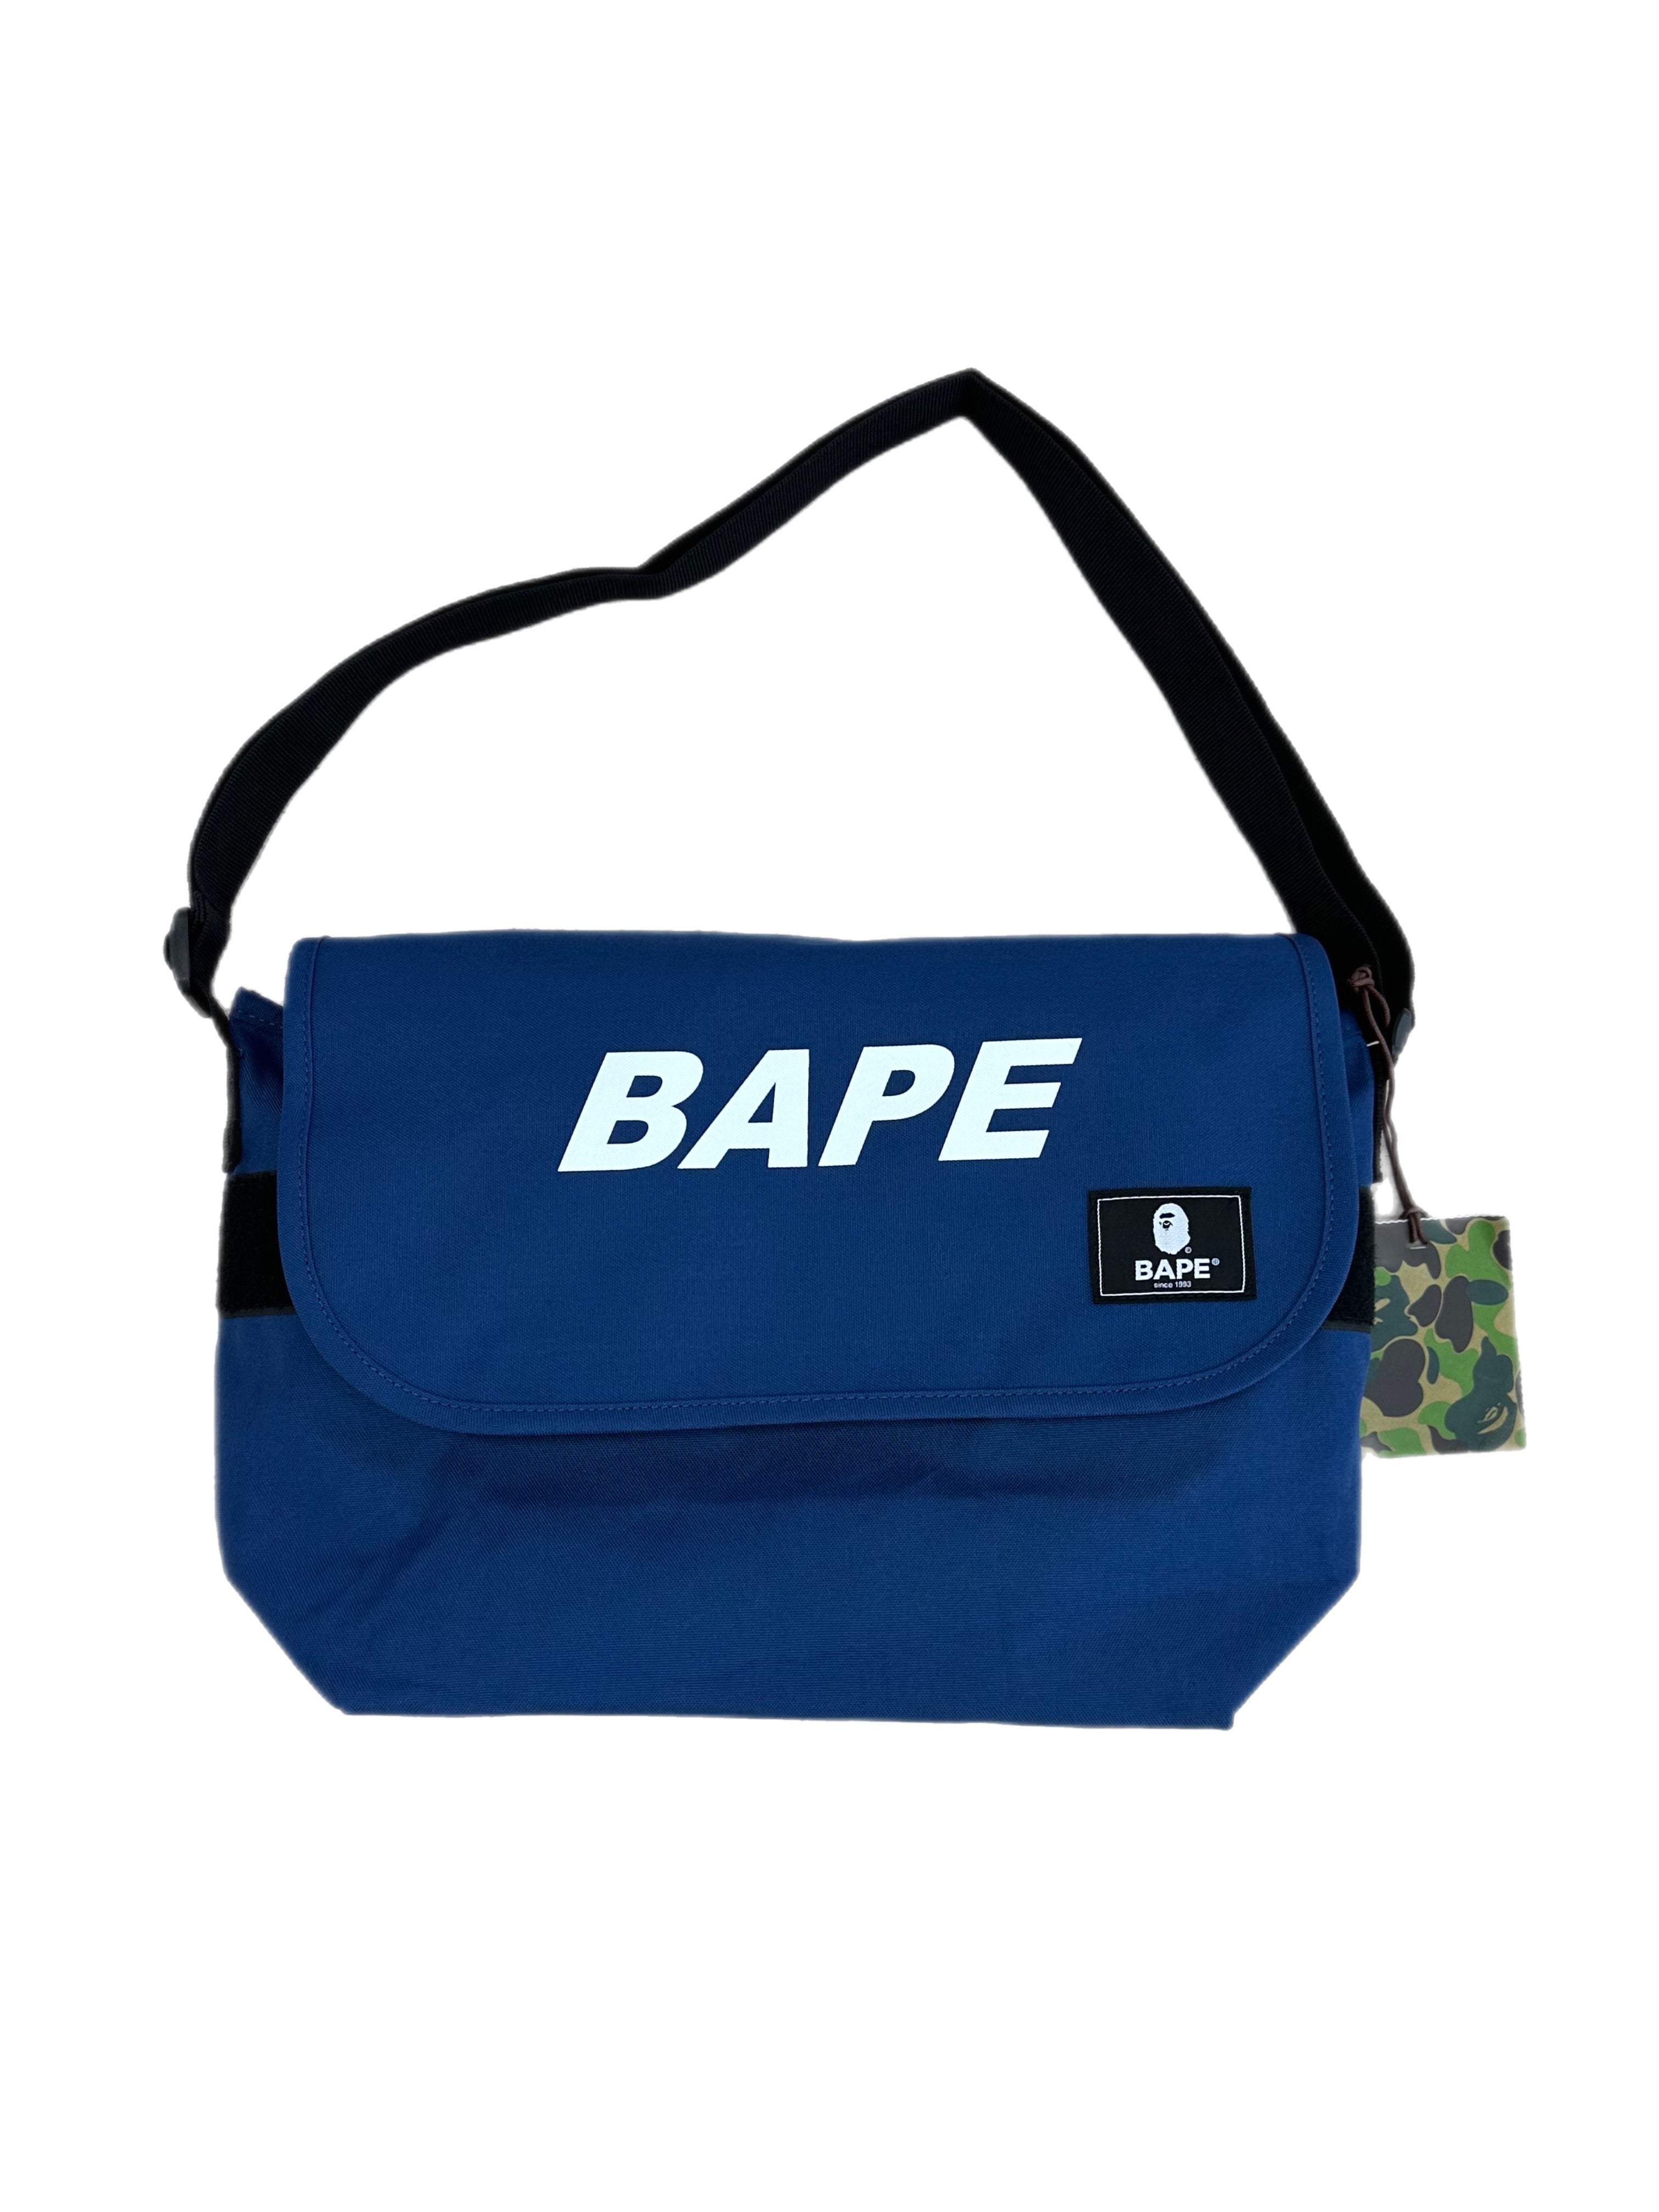 Bape Navy Messenger Bag – On The Arm